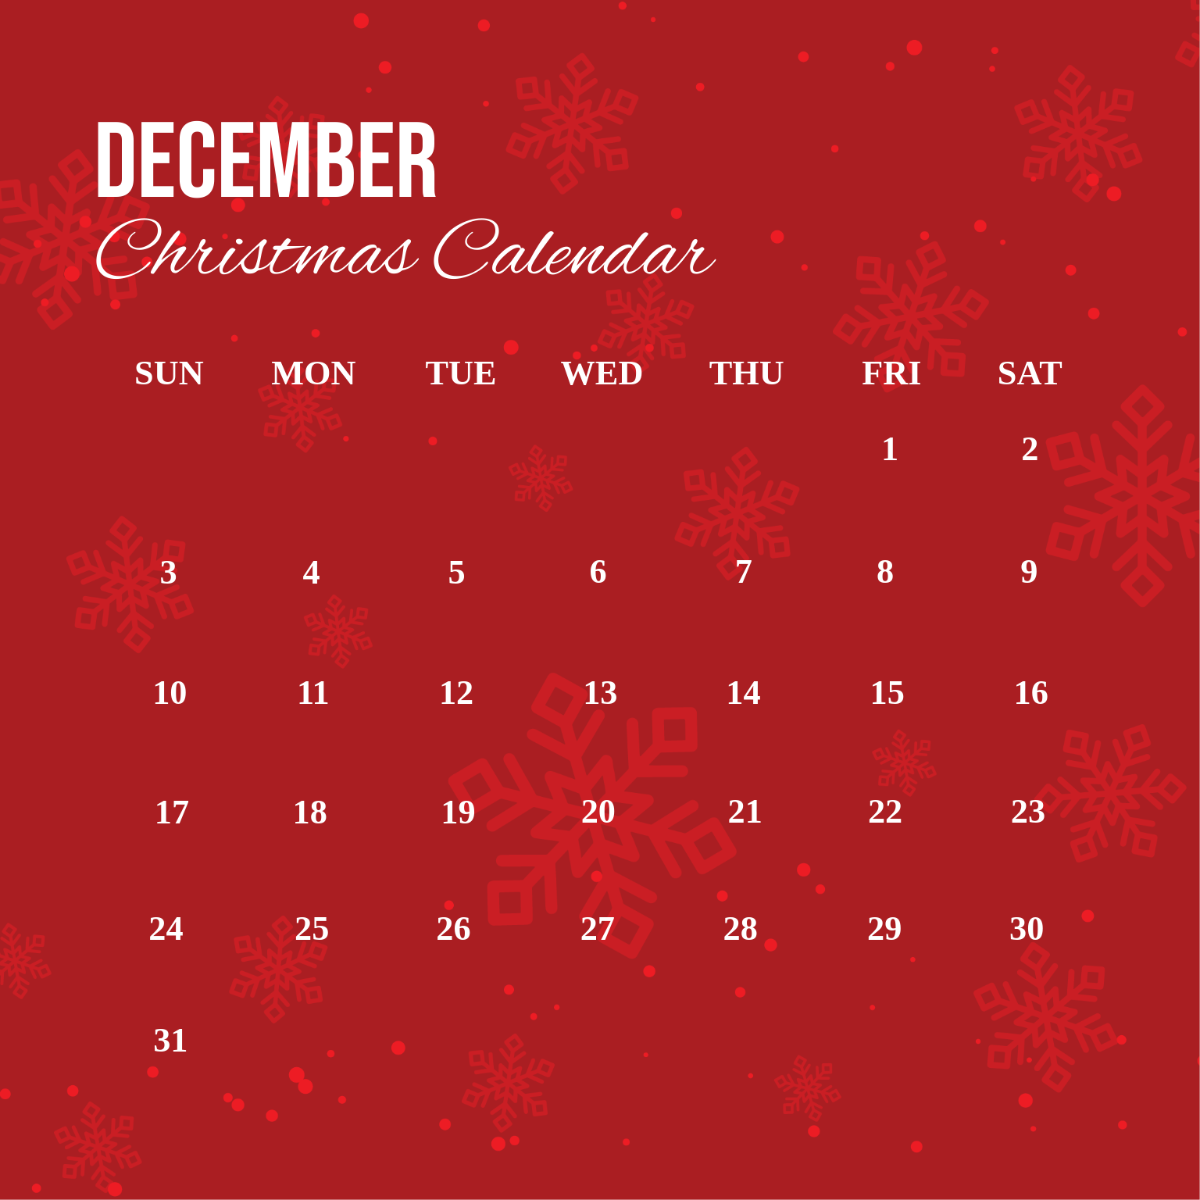 Christmas Calendar Template